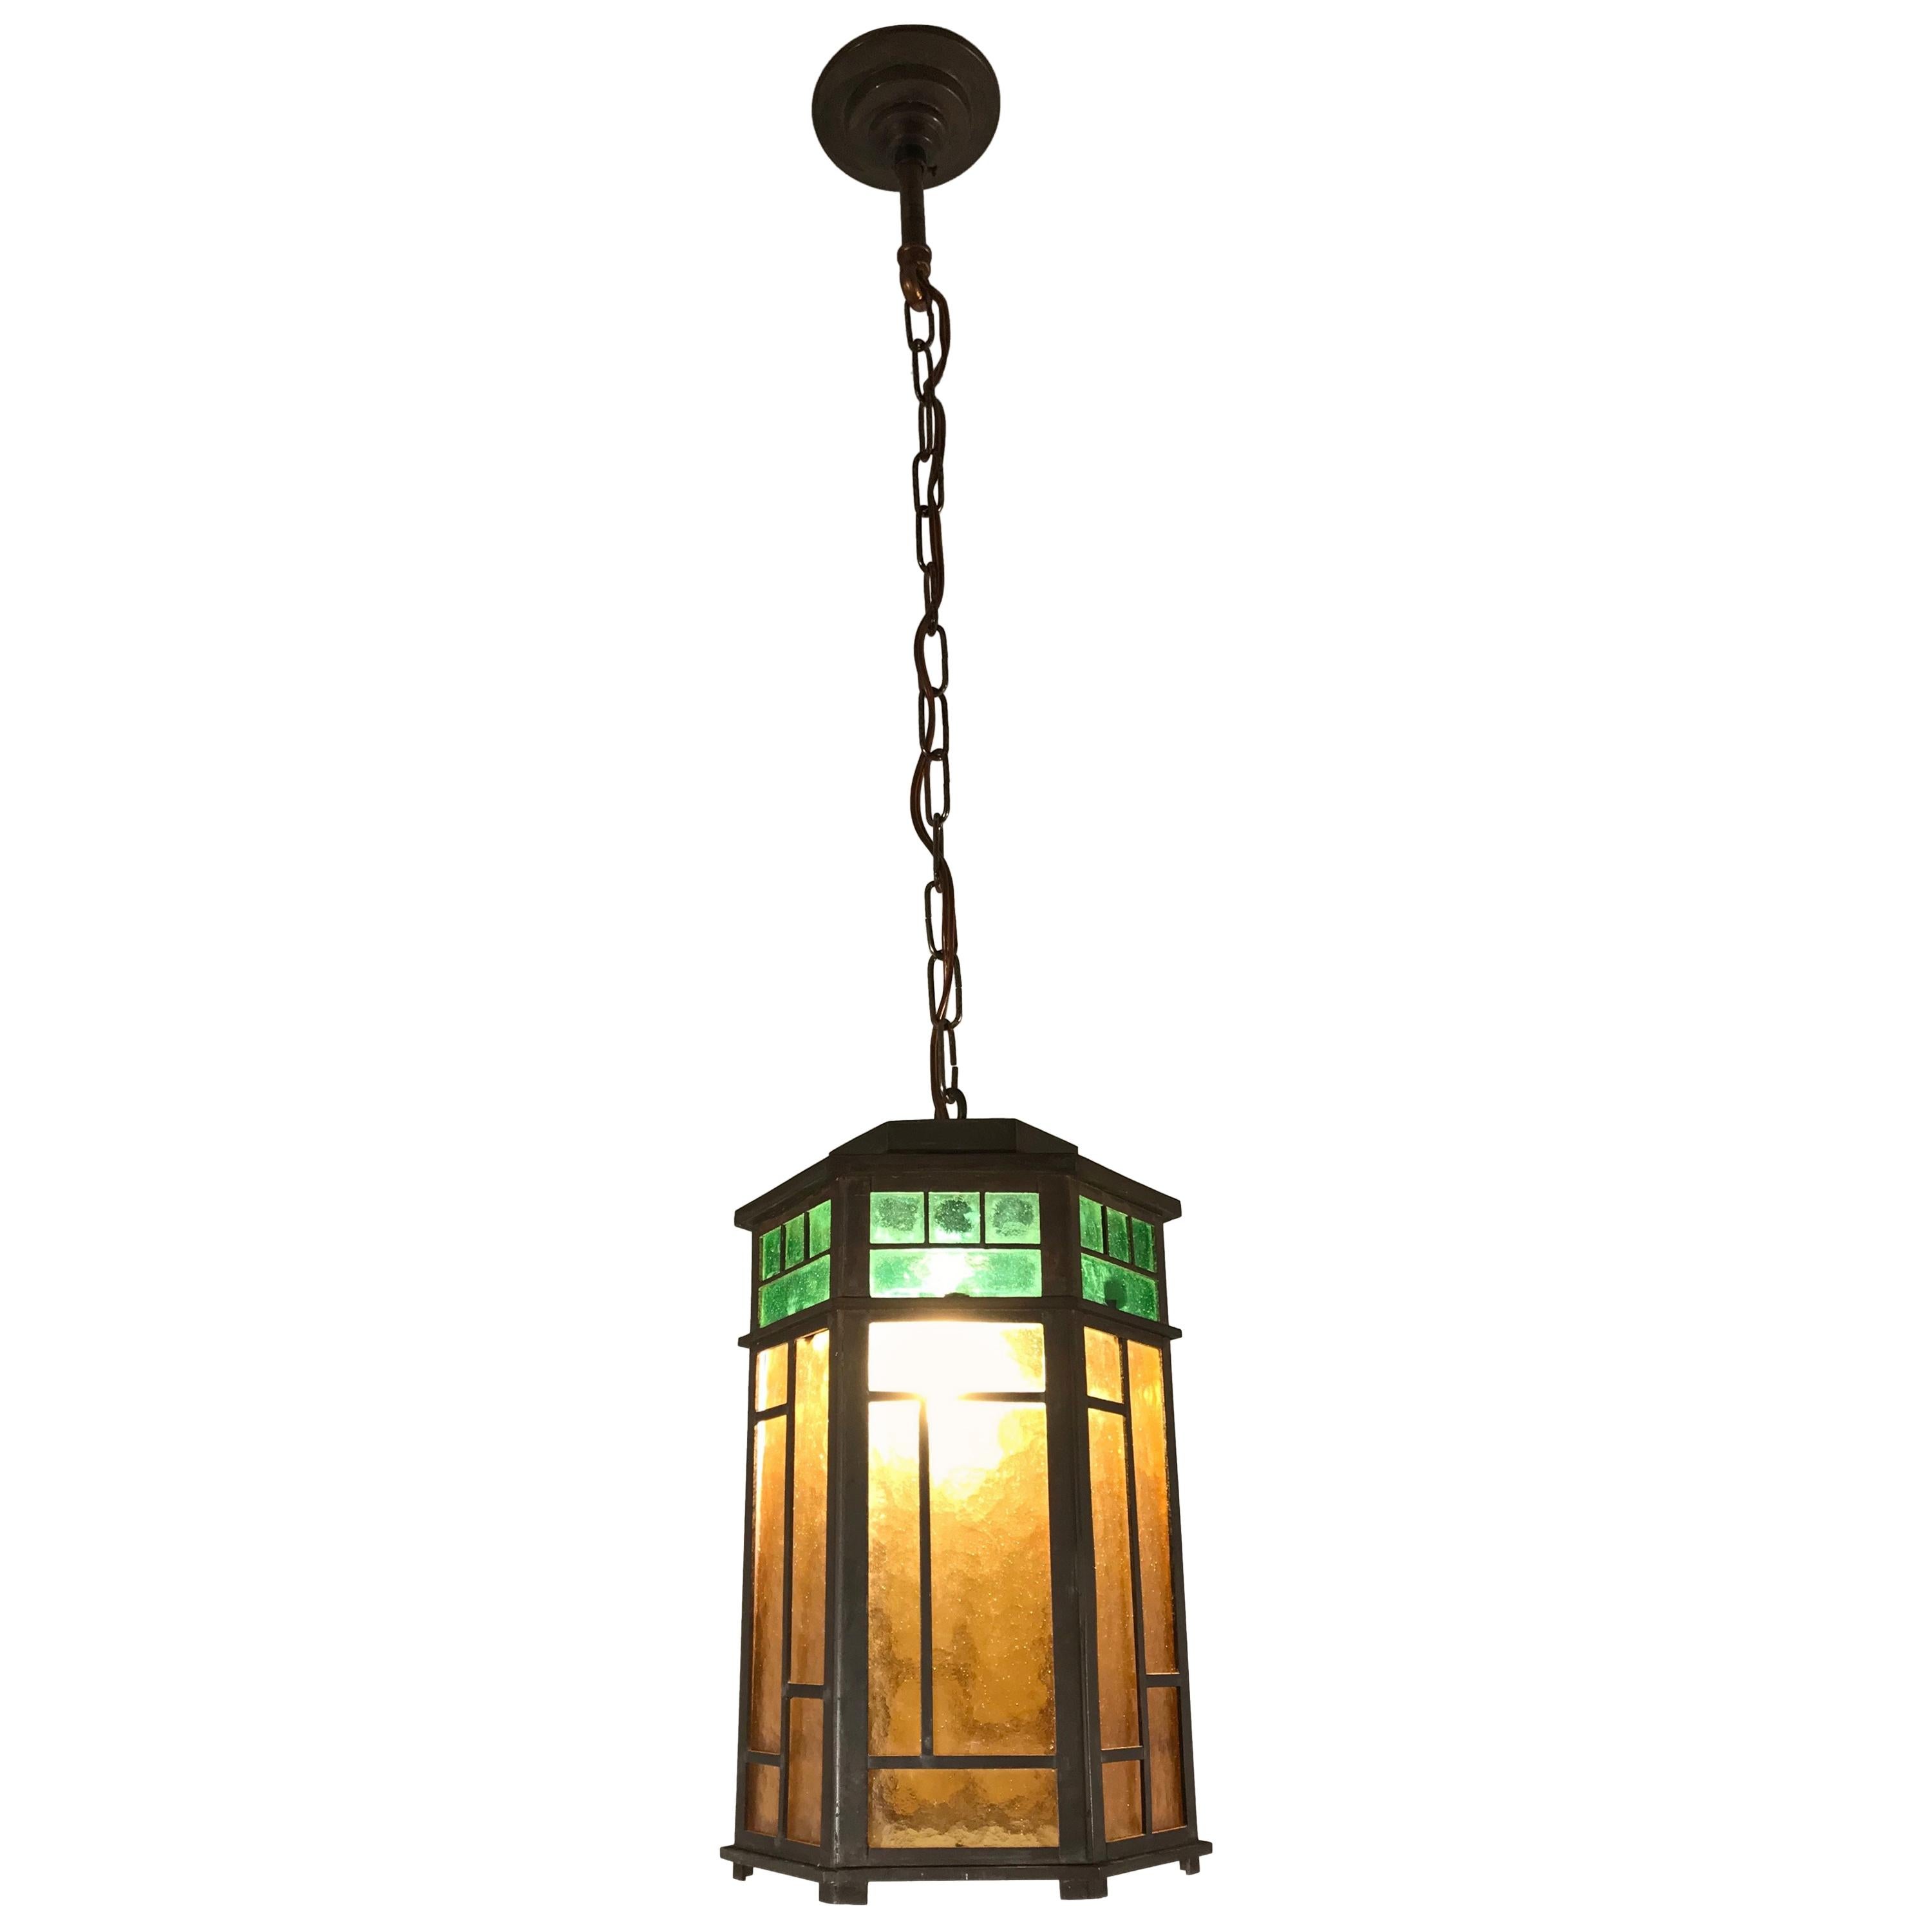 Wonderful Arts & Crafts Brass & Colored Glass Hexagonal Lantern / Pendant Light